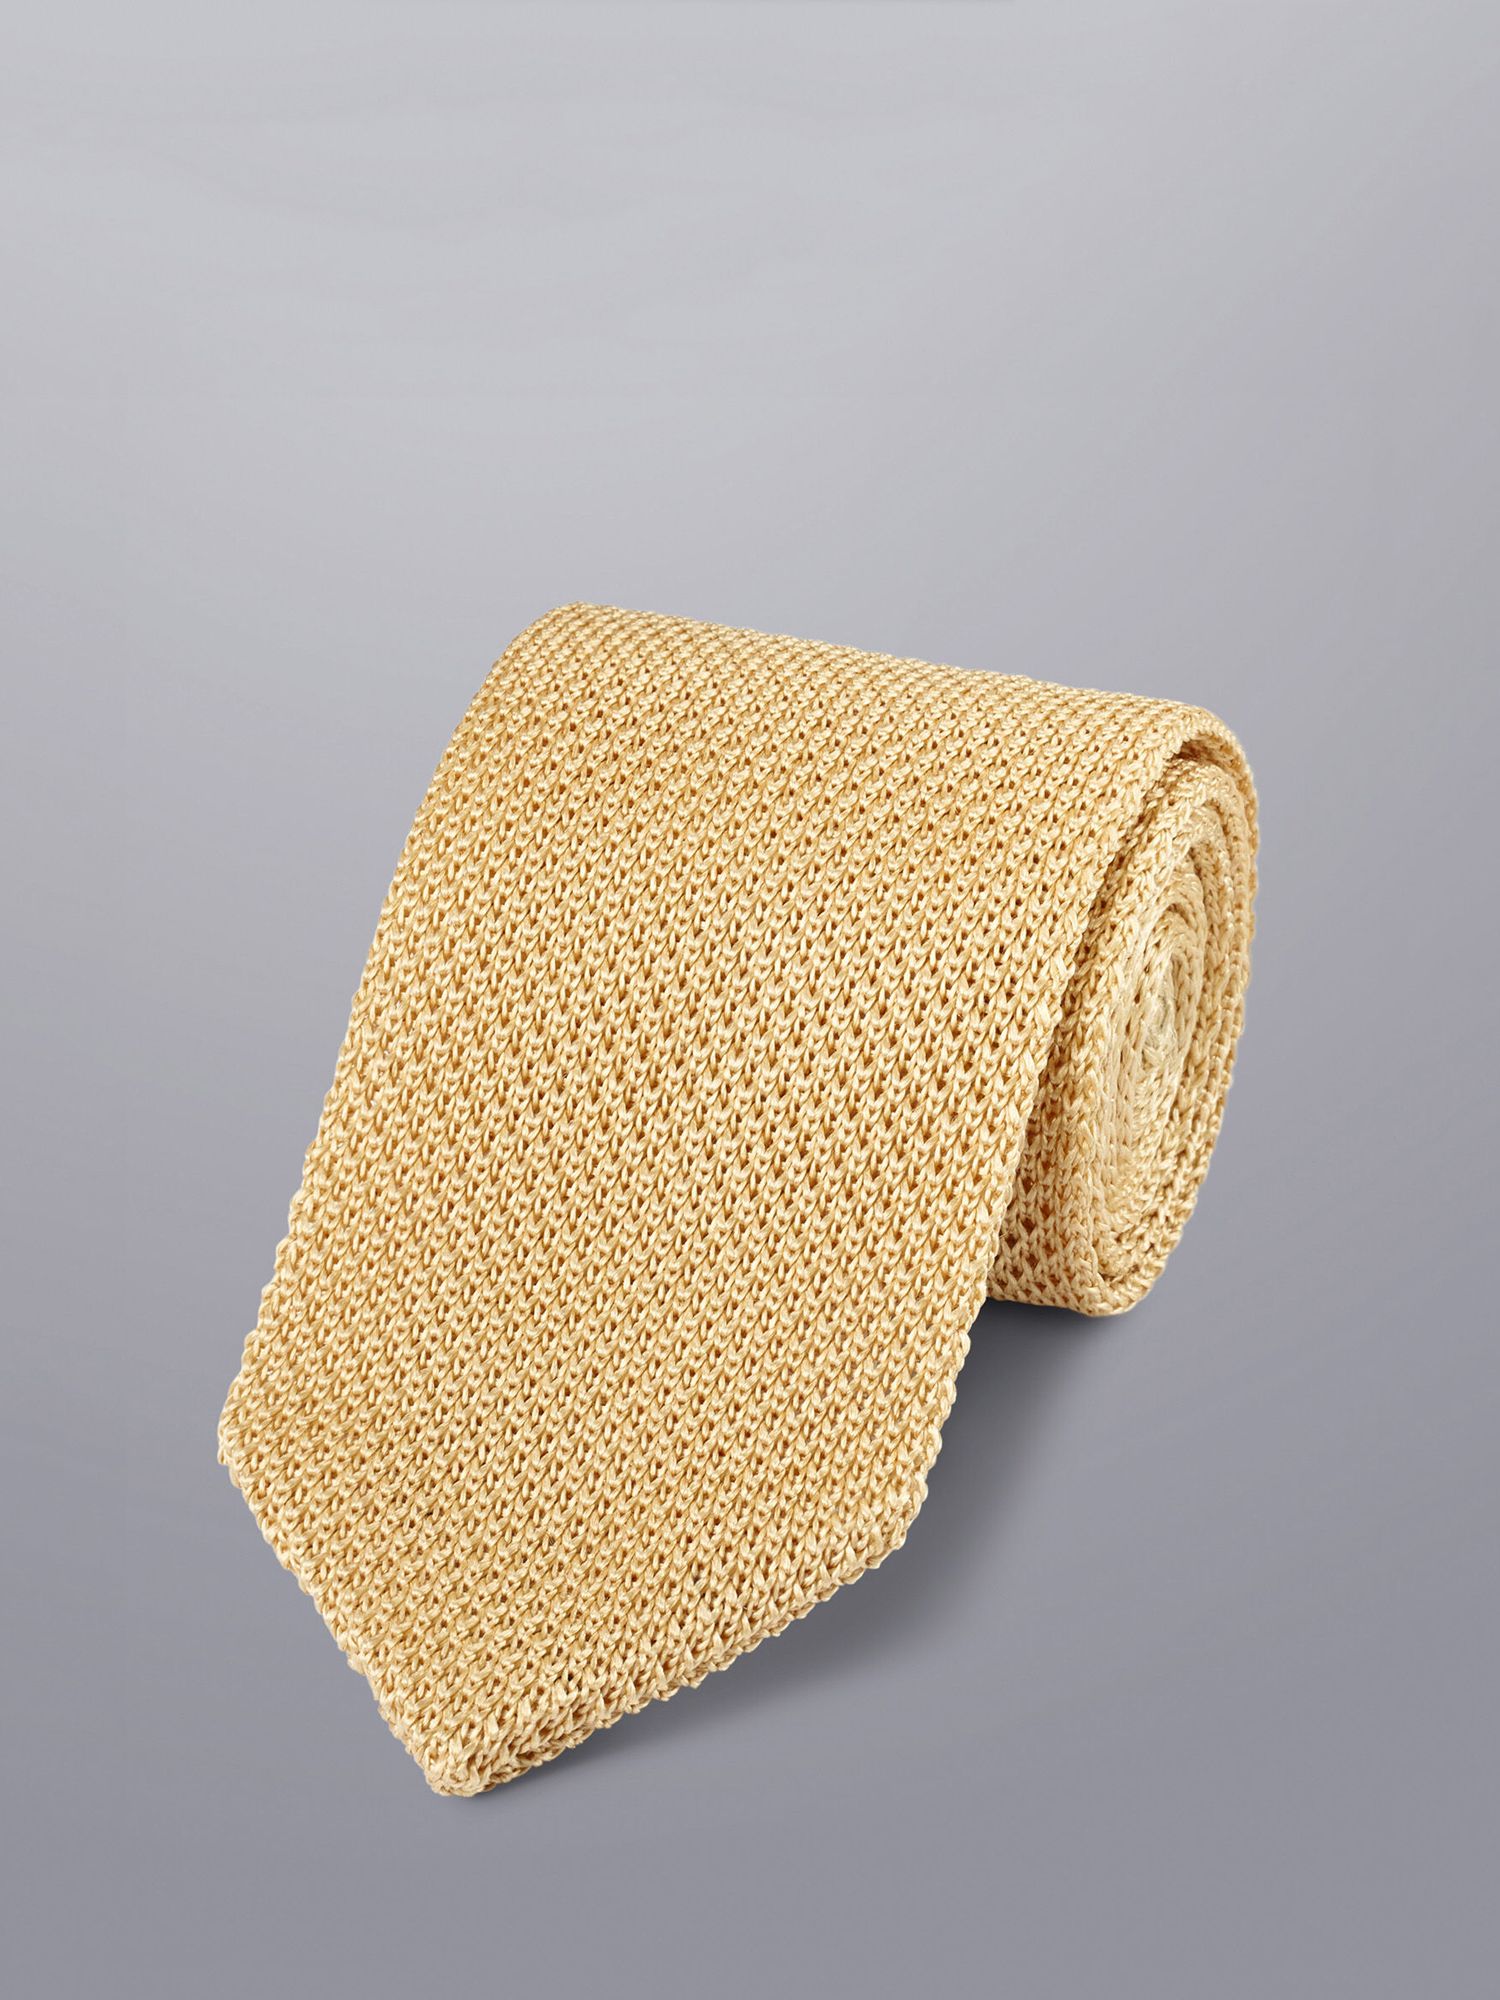 Charles Tyrwhitt Silk Knit Slim Tie, Tan, One Size